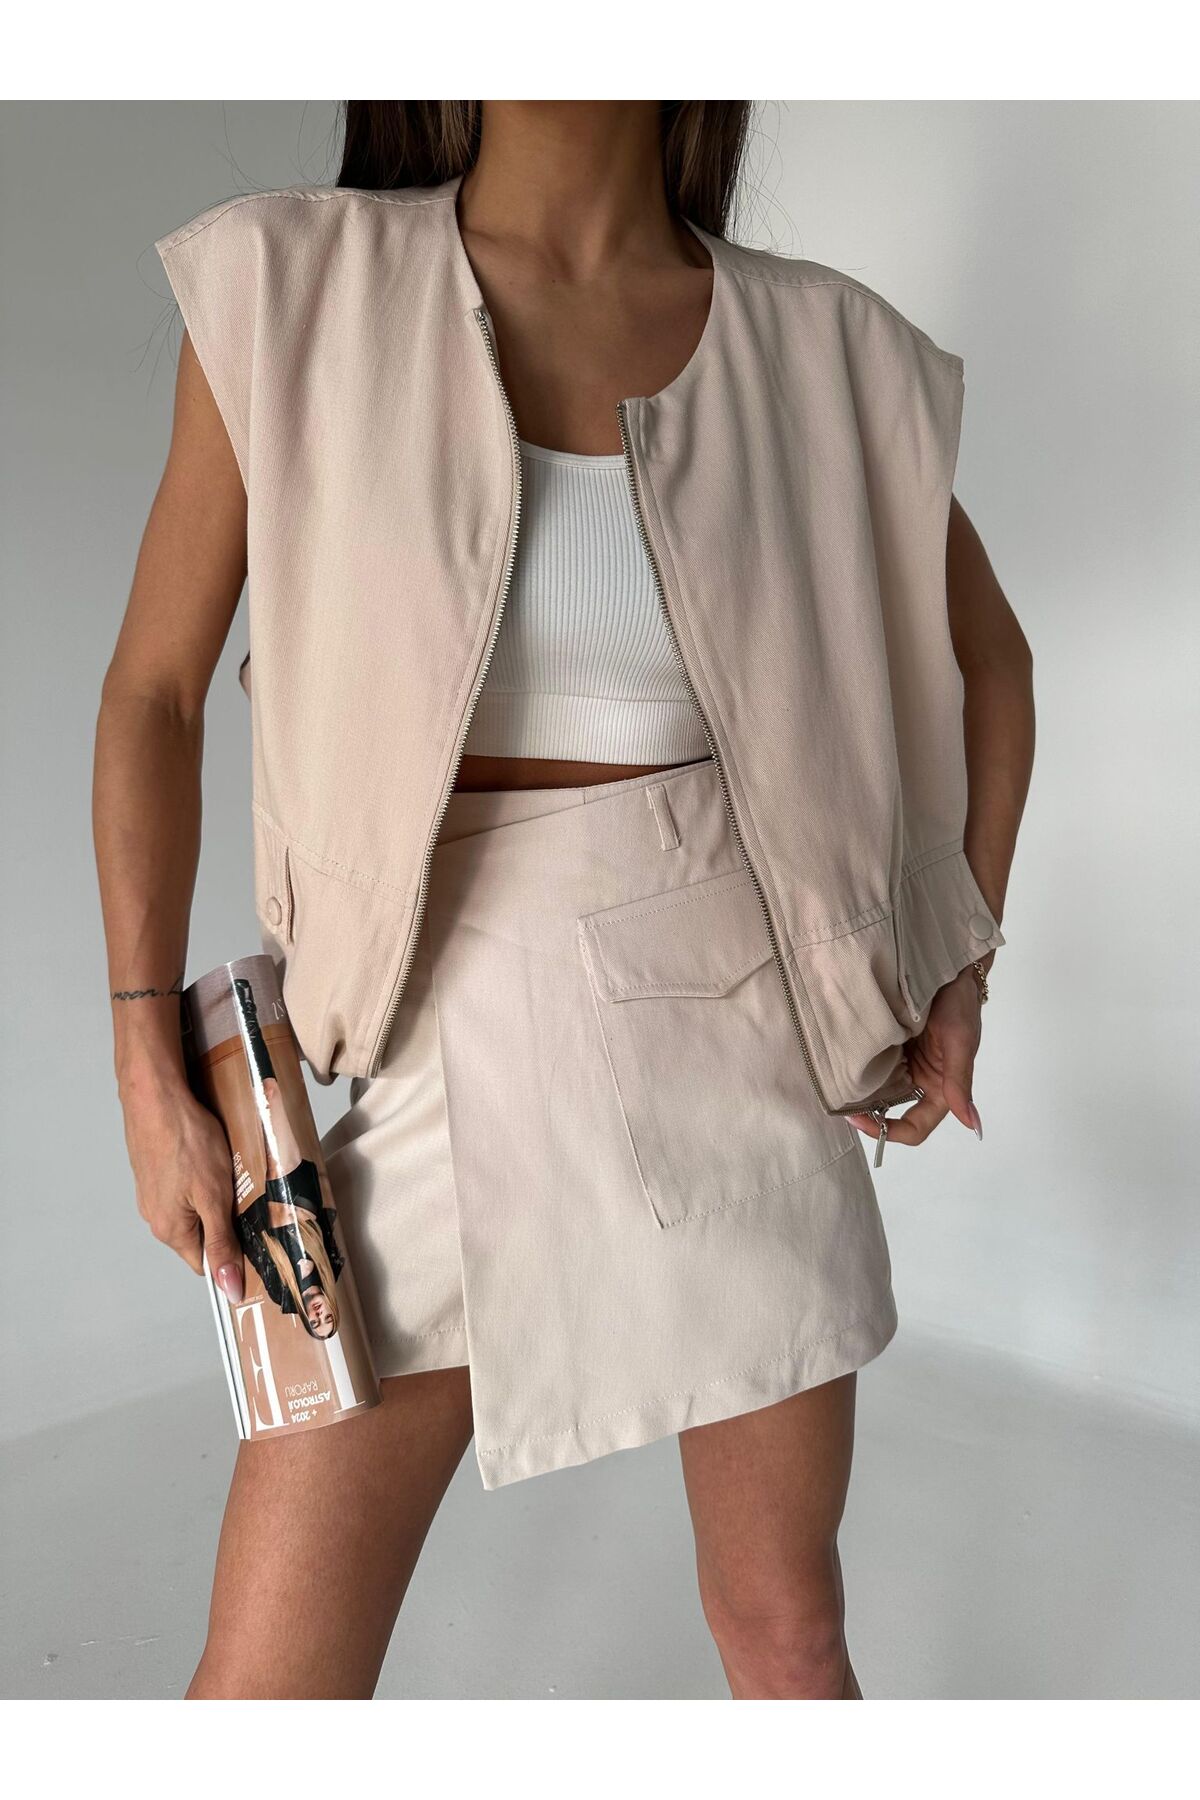 Laluvia Stone Color 100% Cotton Gabardine Short Skirt